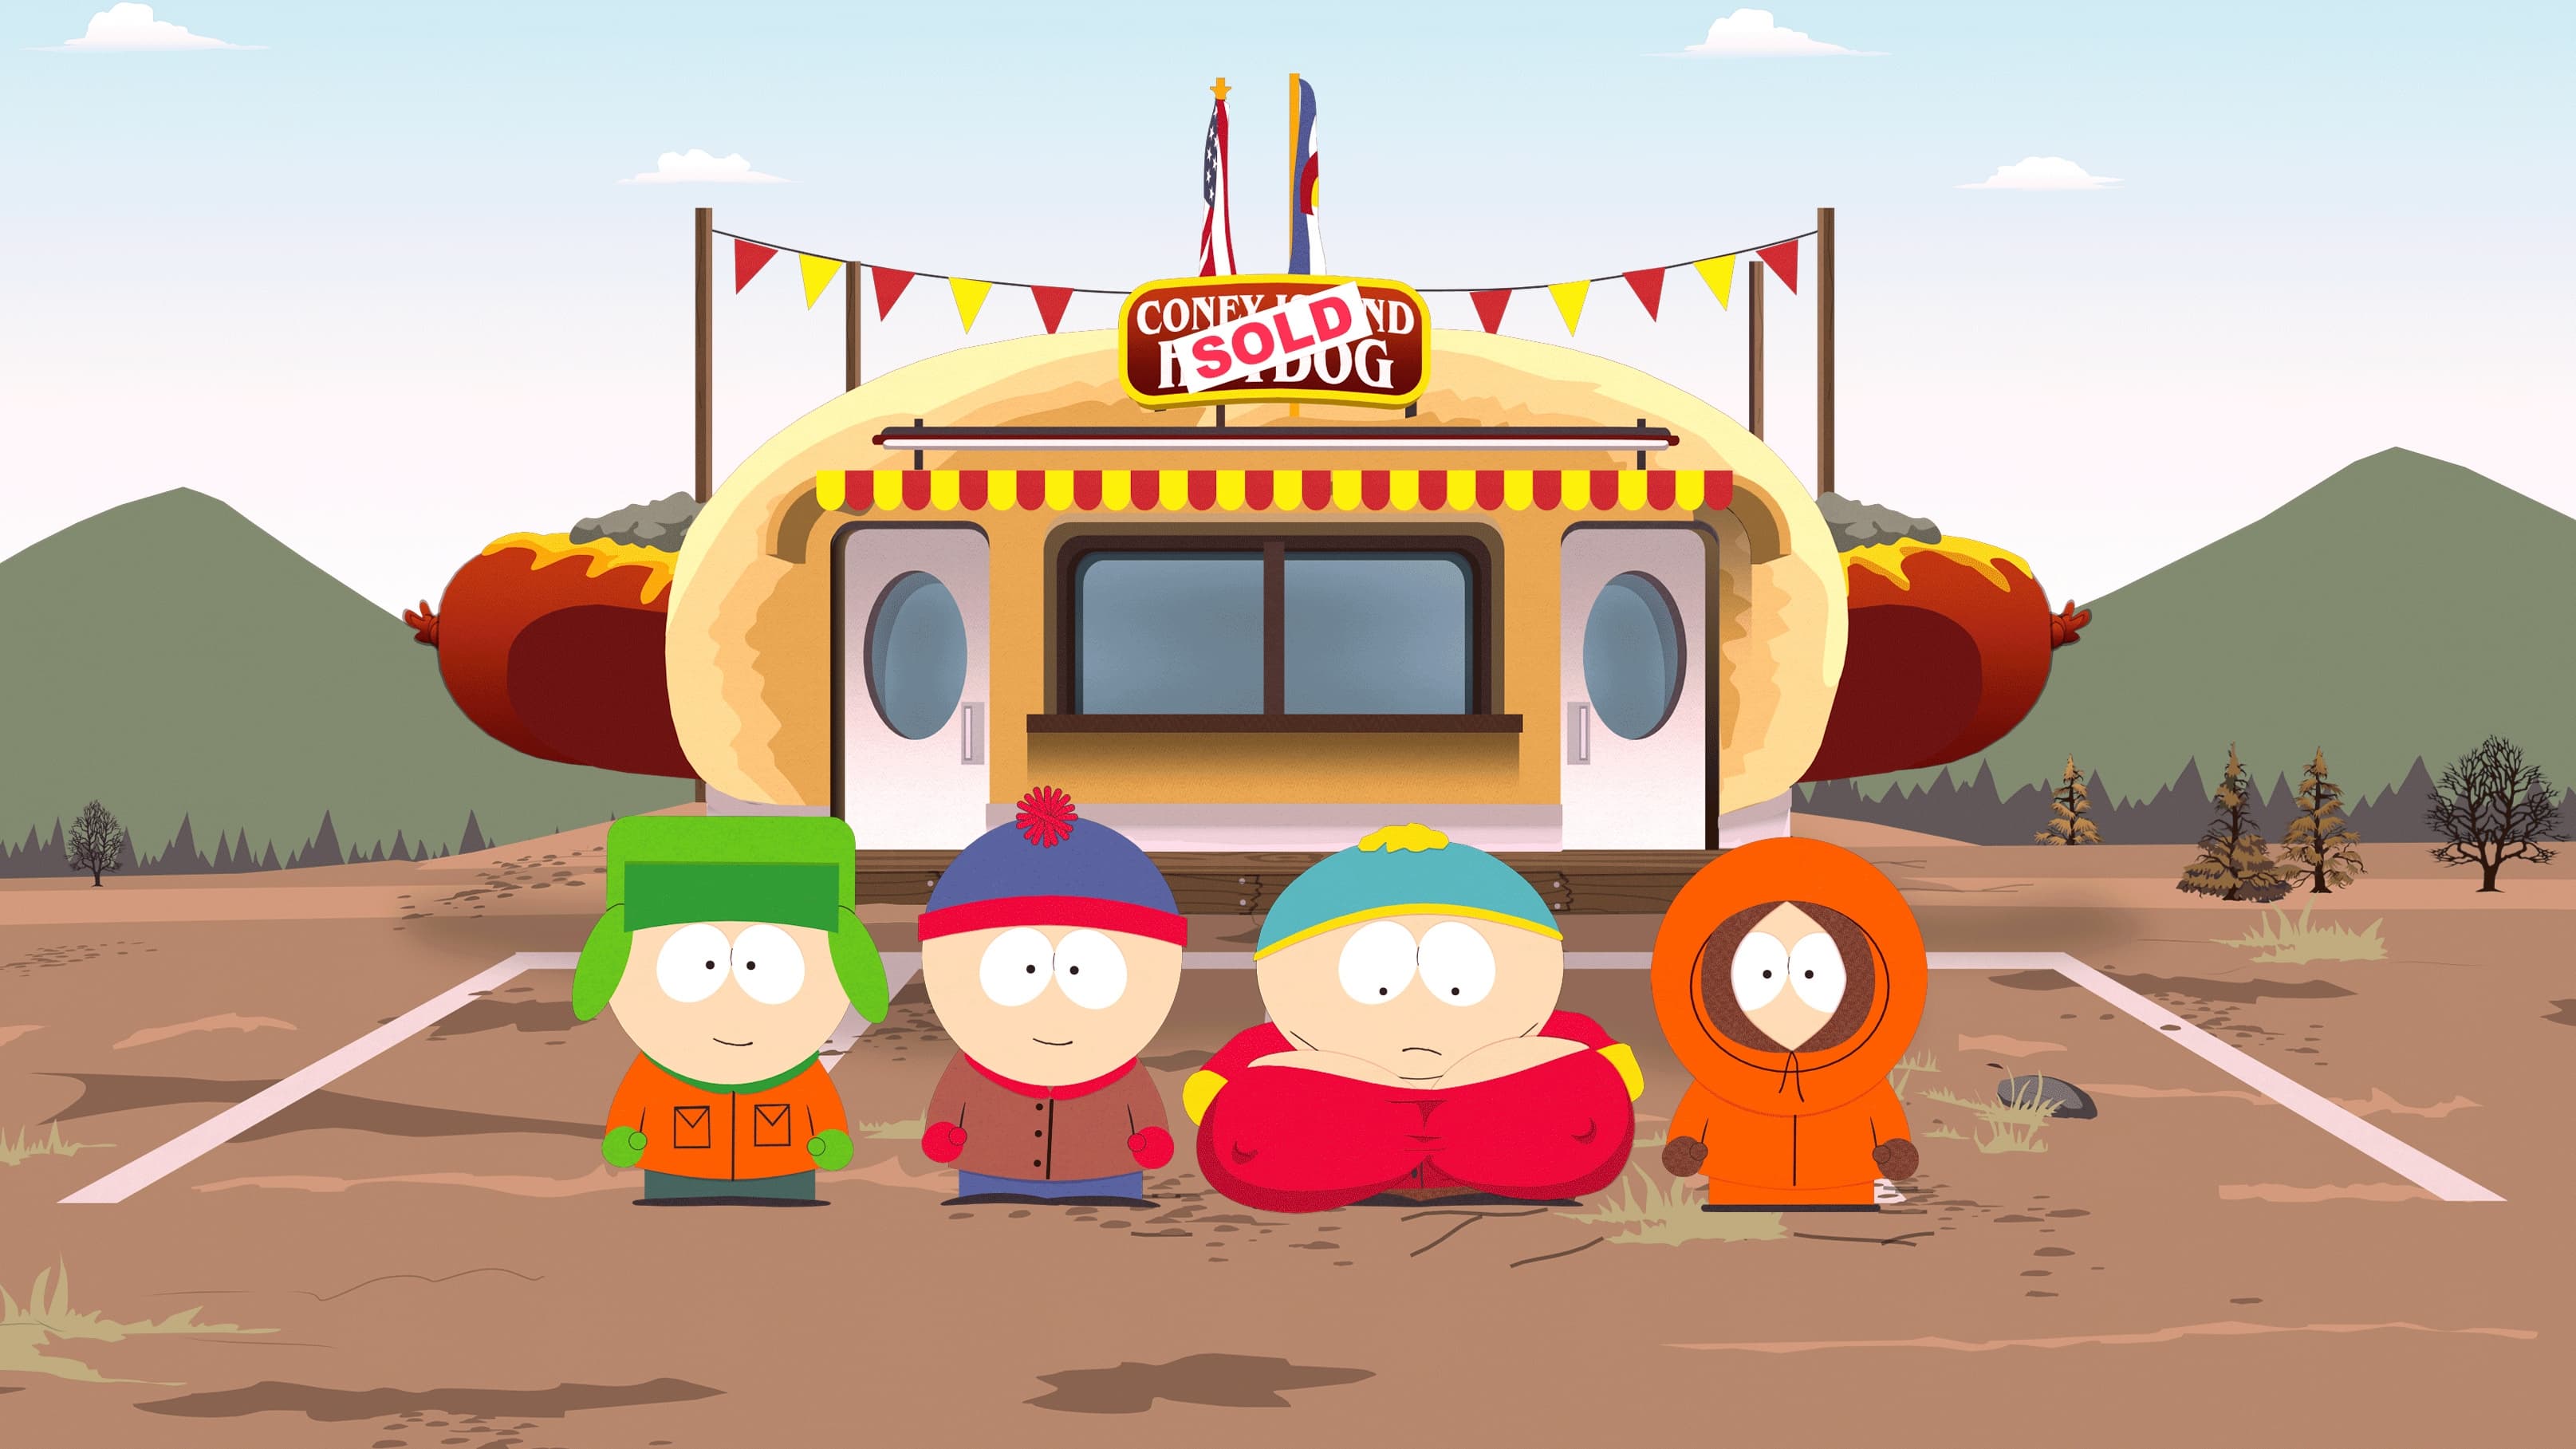 South Park: Las guerras de streaming parte 2 (2022)